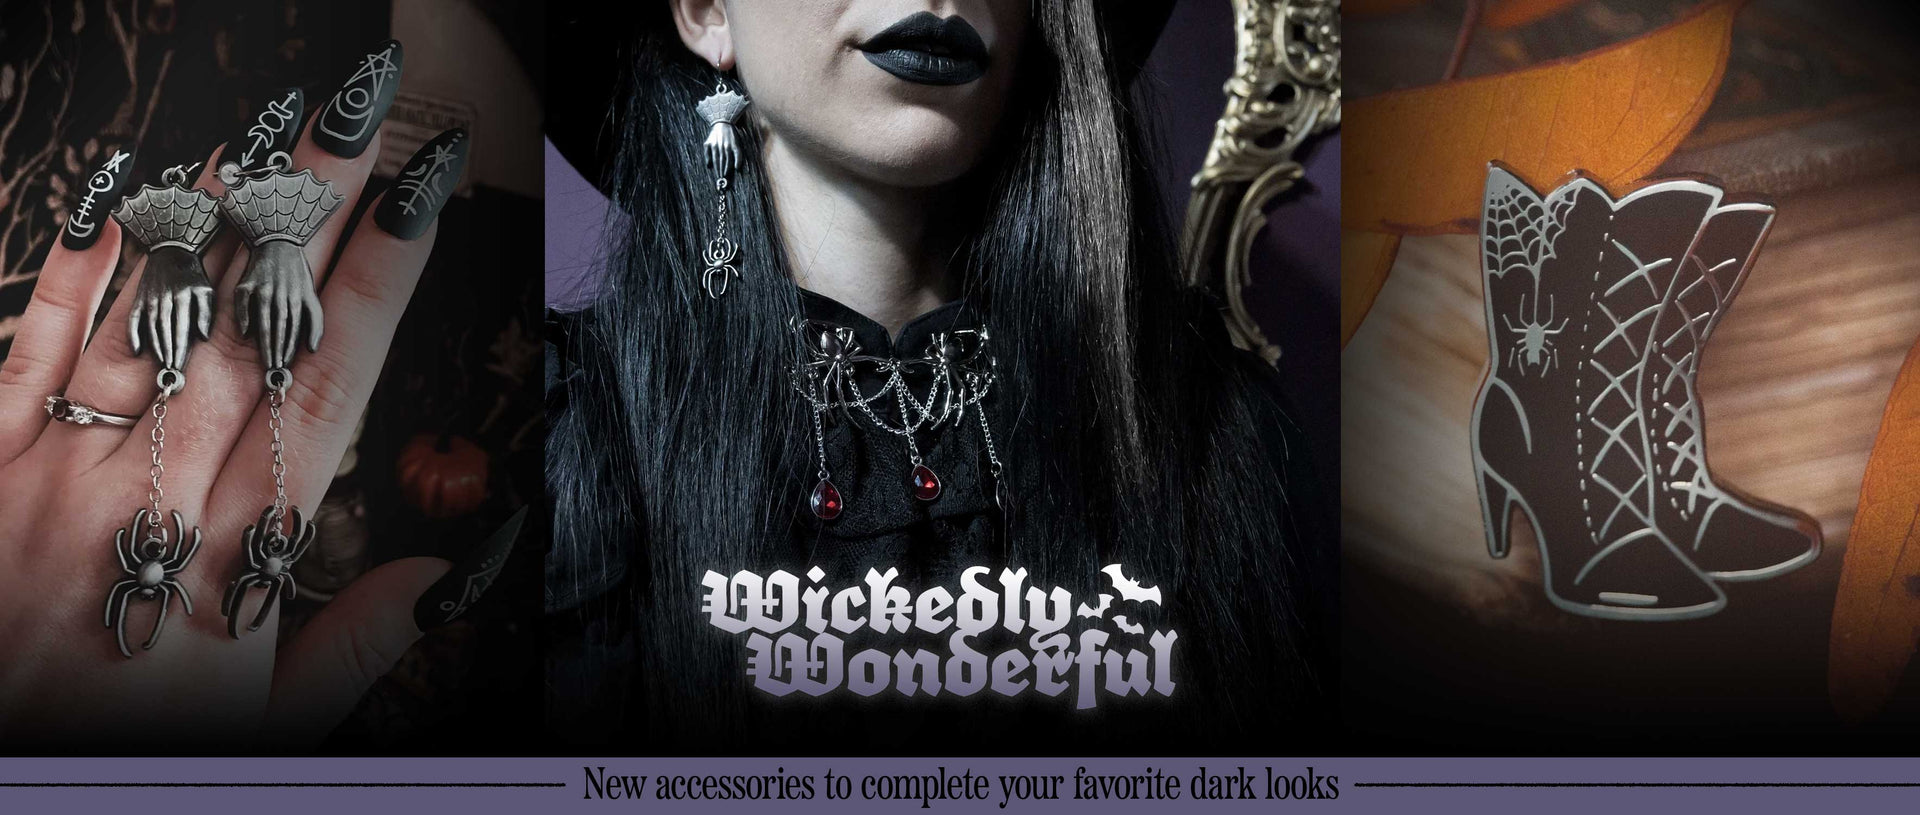 Alternative Accessories For Dark Looks